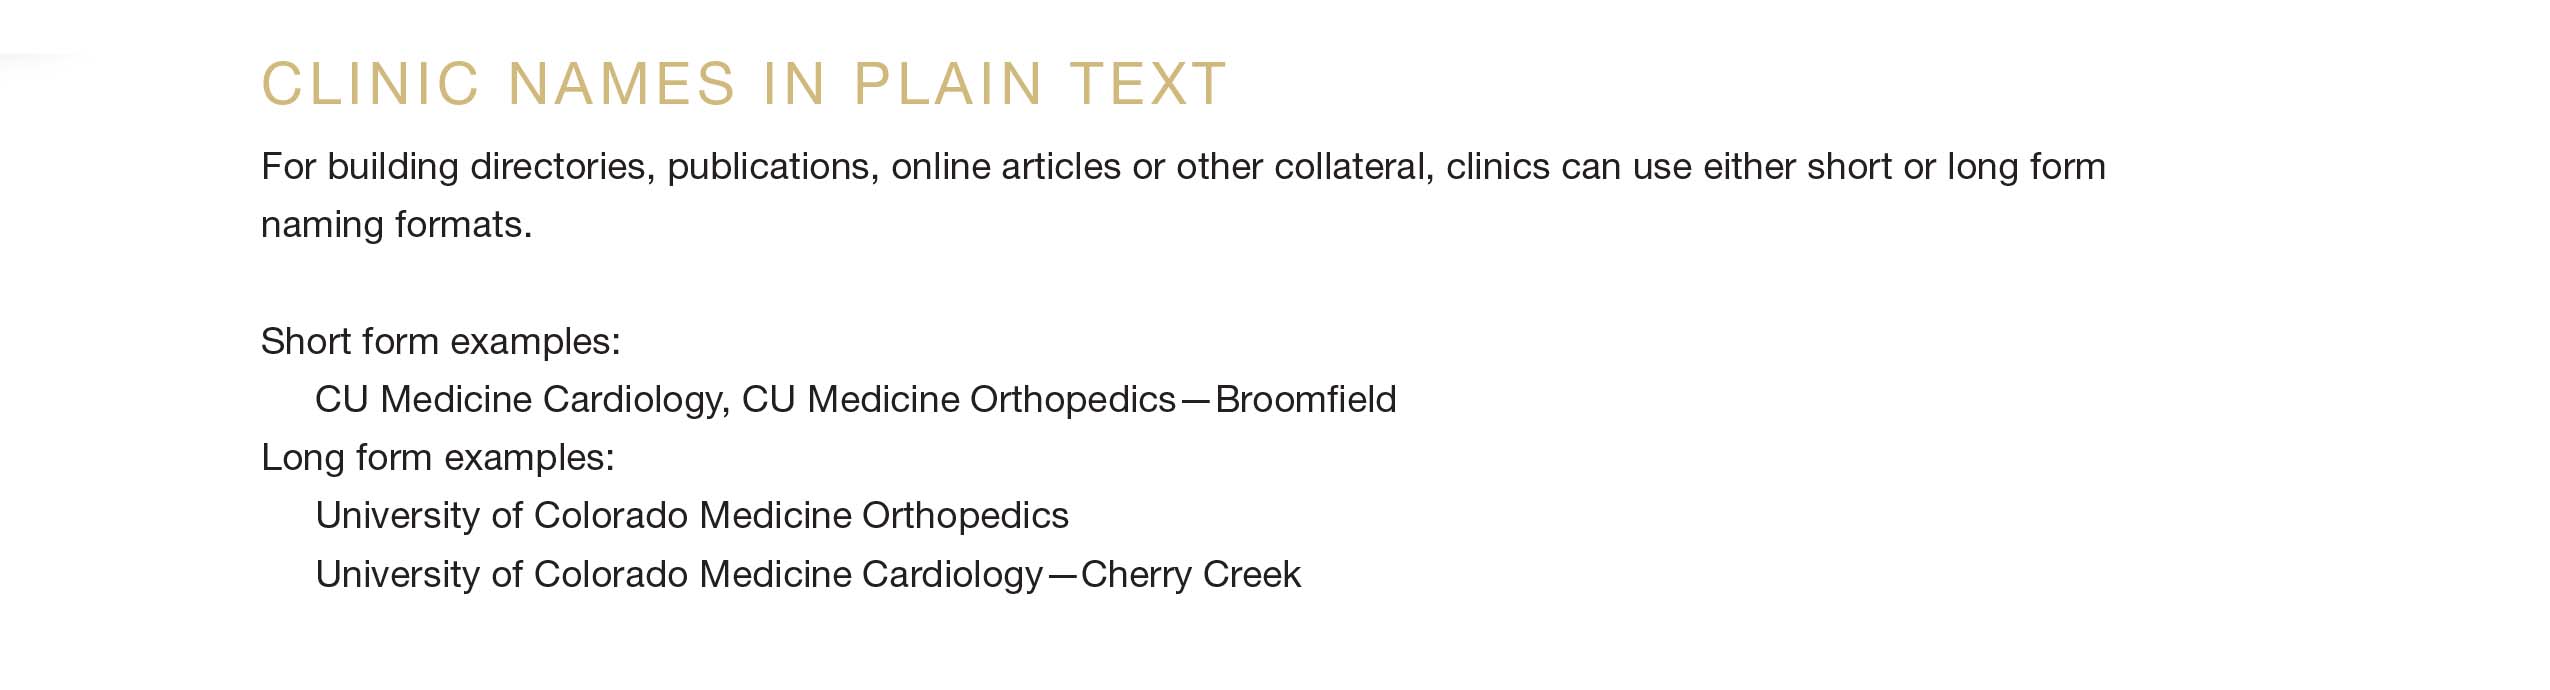 clinic-names-plain-text